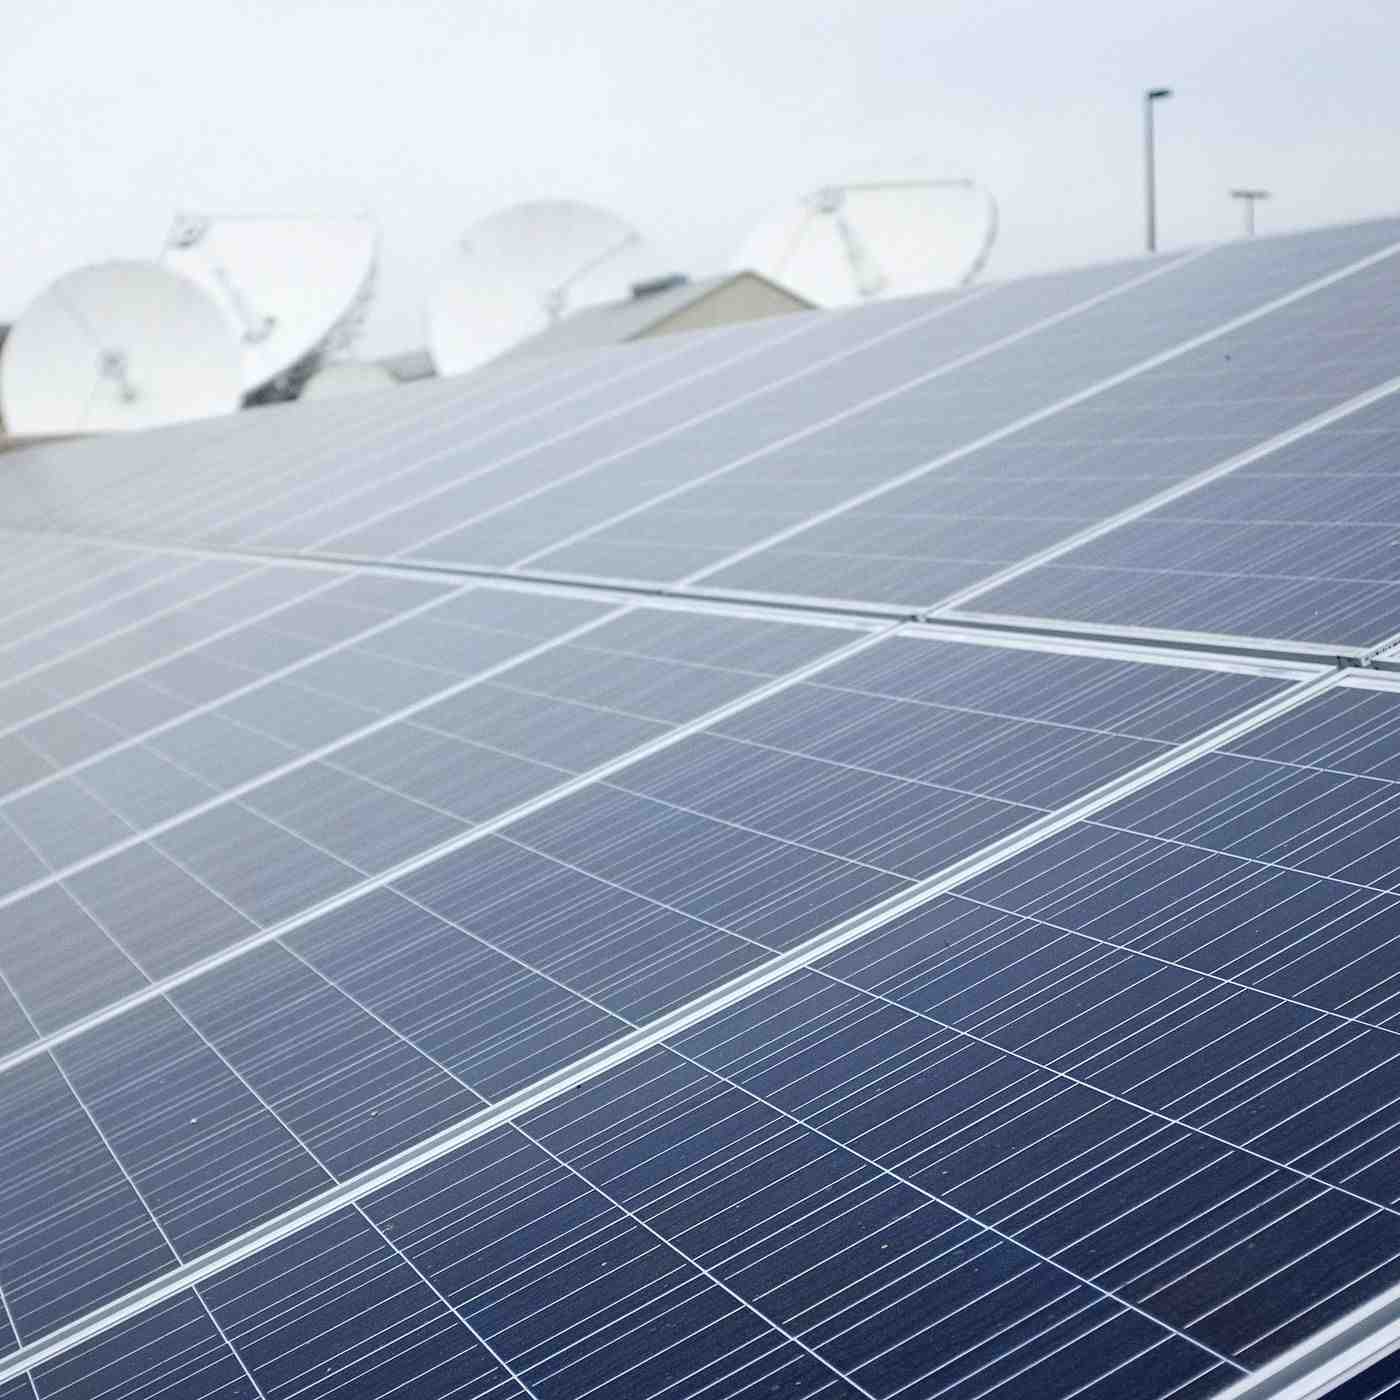 Is Solar Turbines a public company?